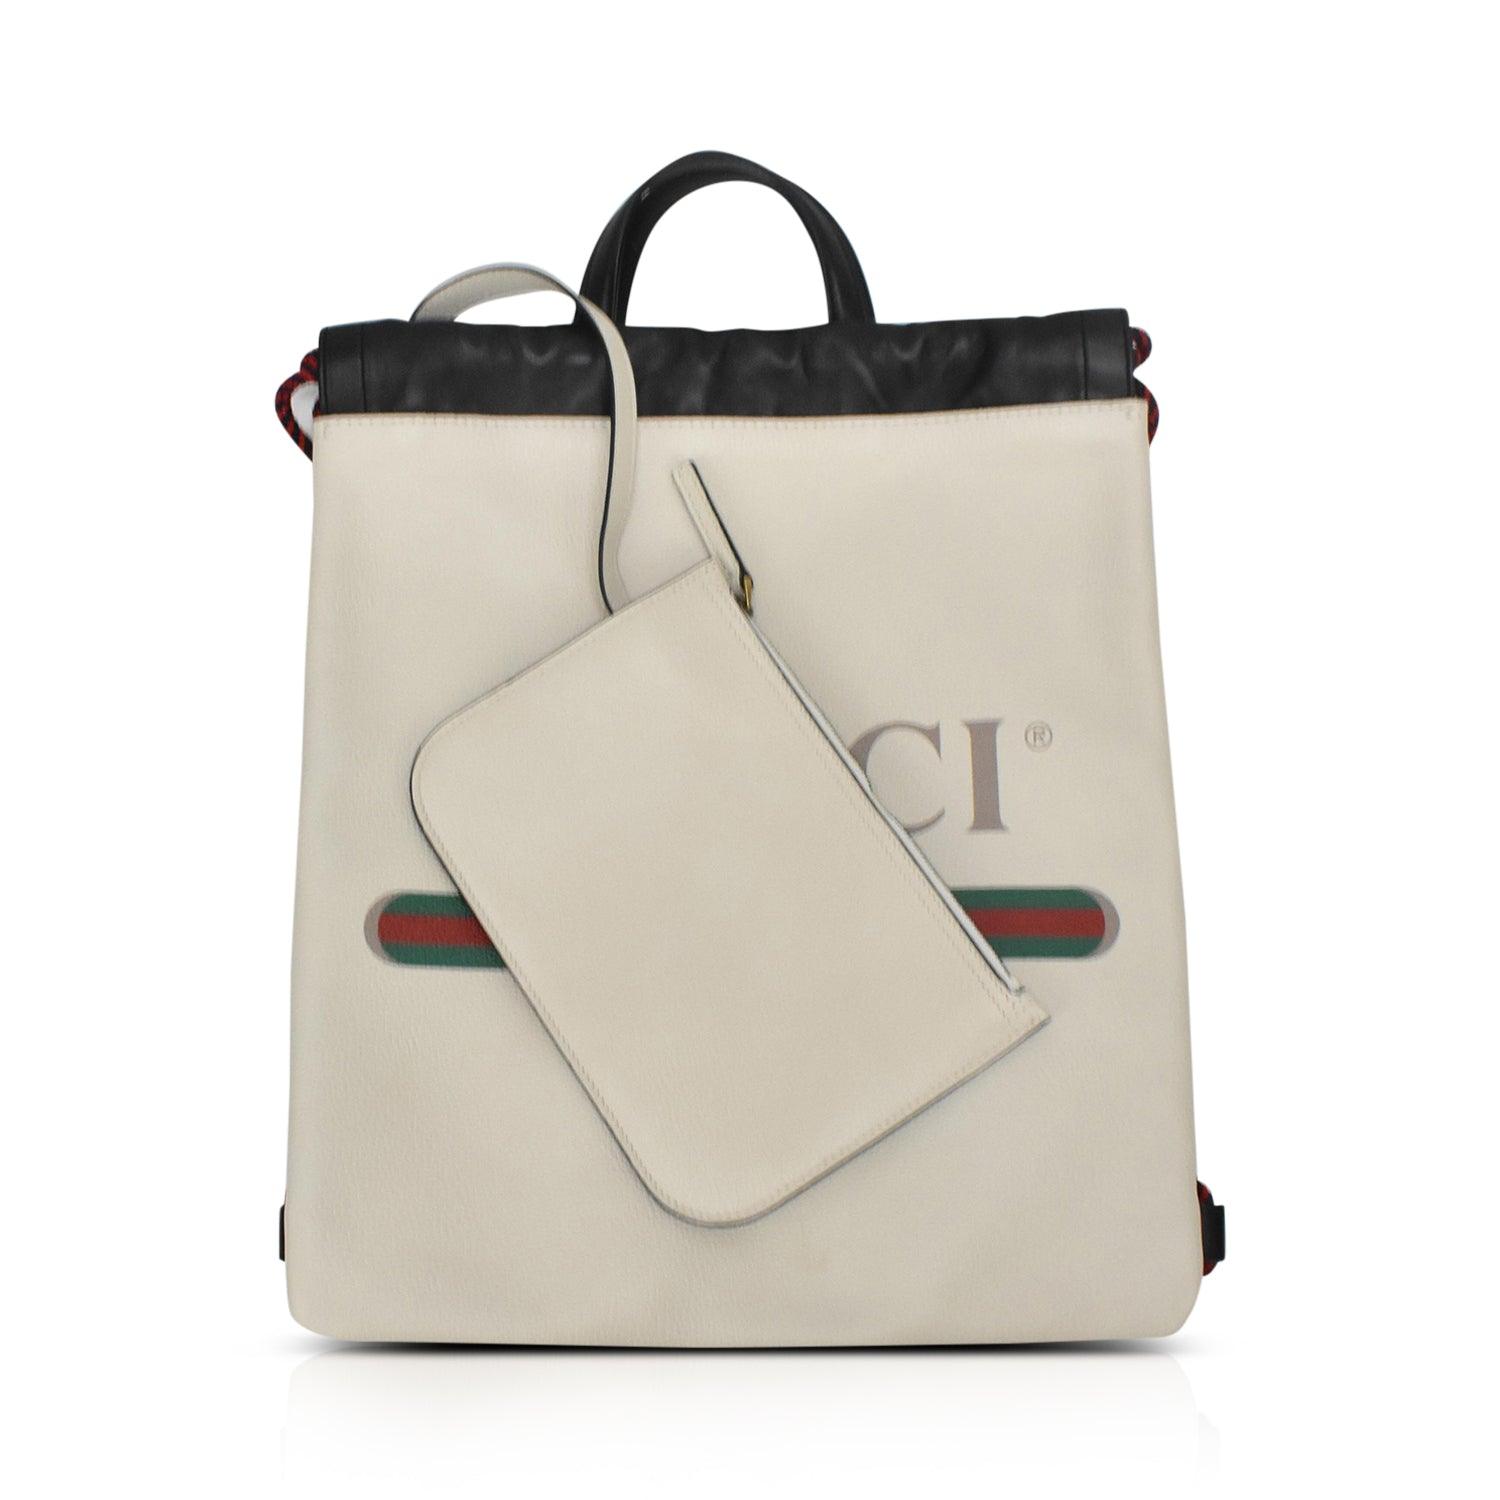 Gucci Drawstring Bag - Fashionably Yours